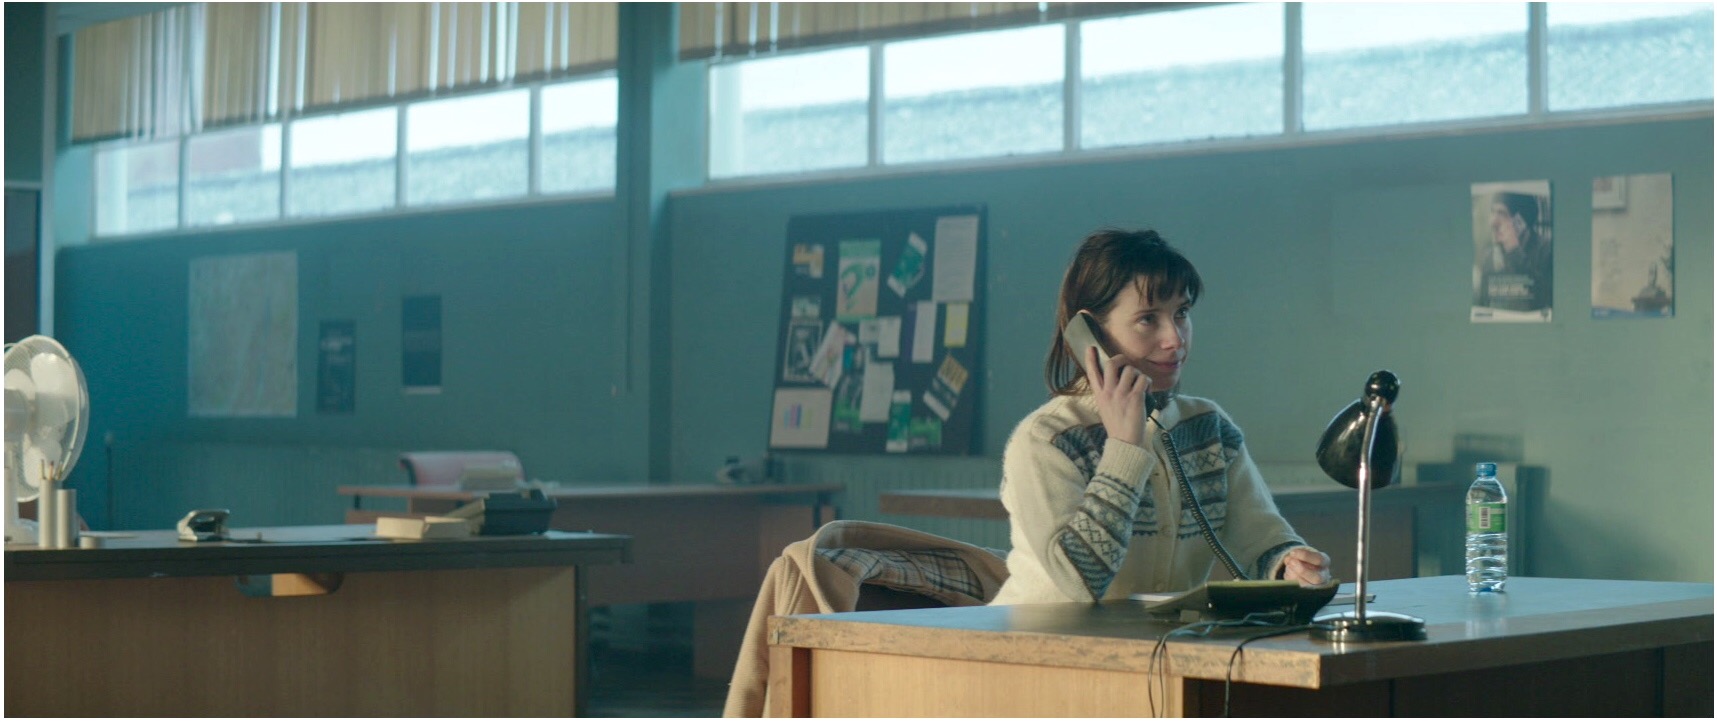 The Phone Call ... Oscar winner Best Short Film 2015